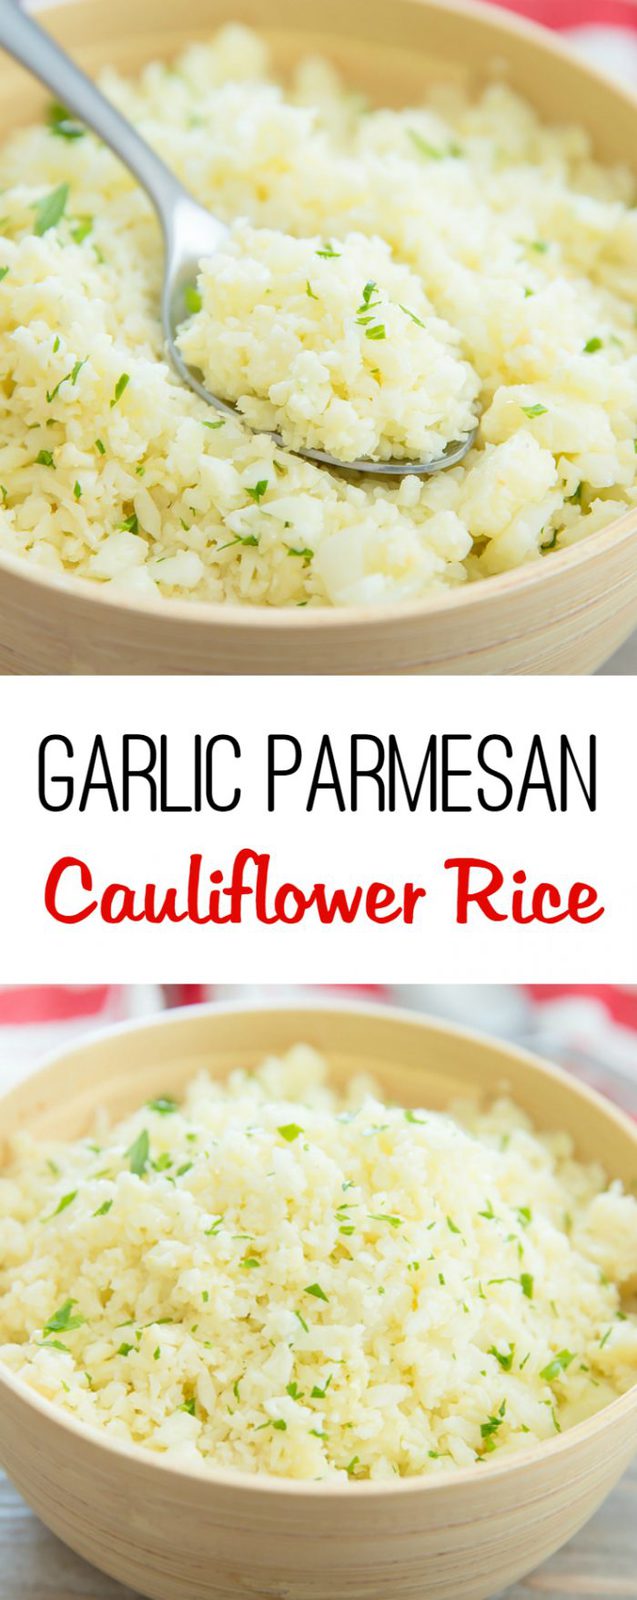 Garlic Parmesan Cauliflower Rice